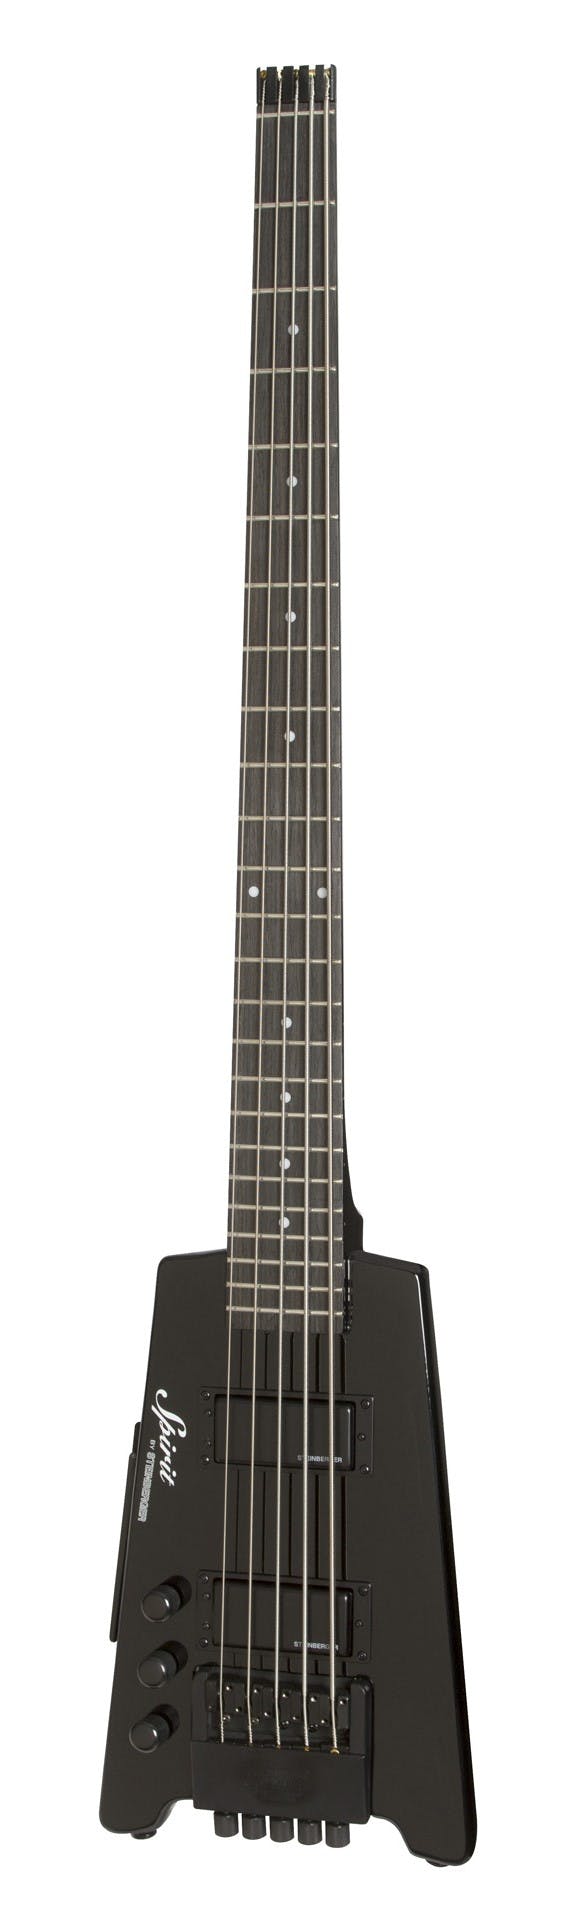 Steinberger Spirit XT-25 Standard 5-string Bass Outfit Left Handed in Black